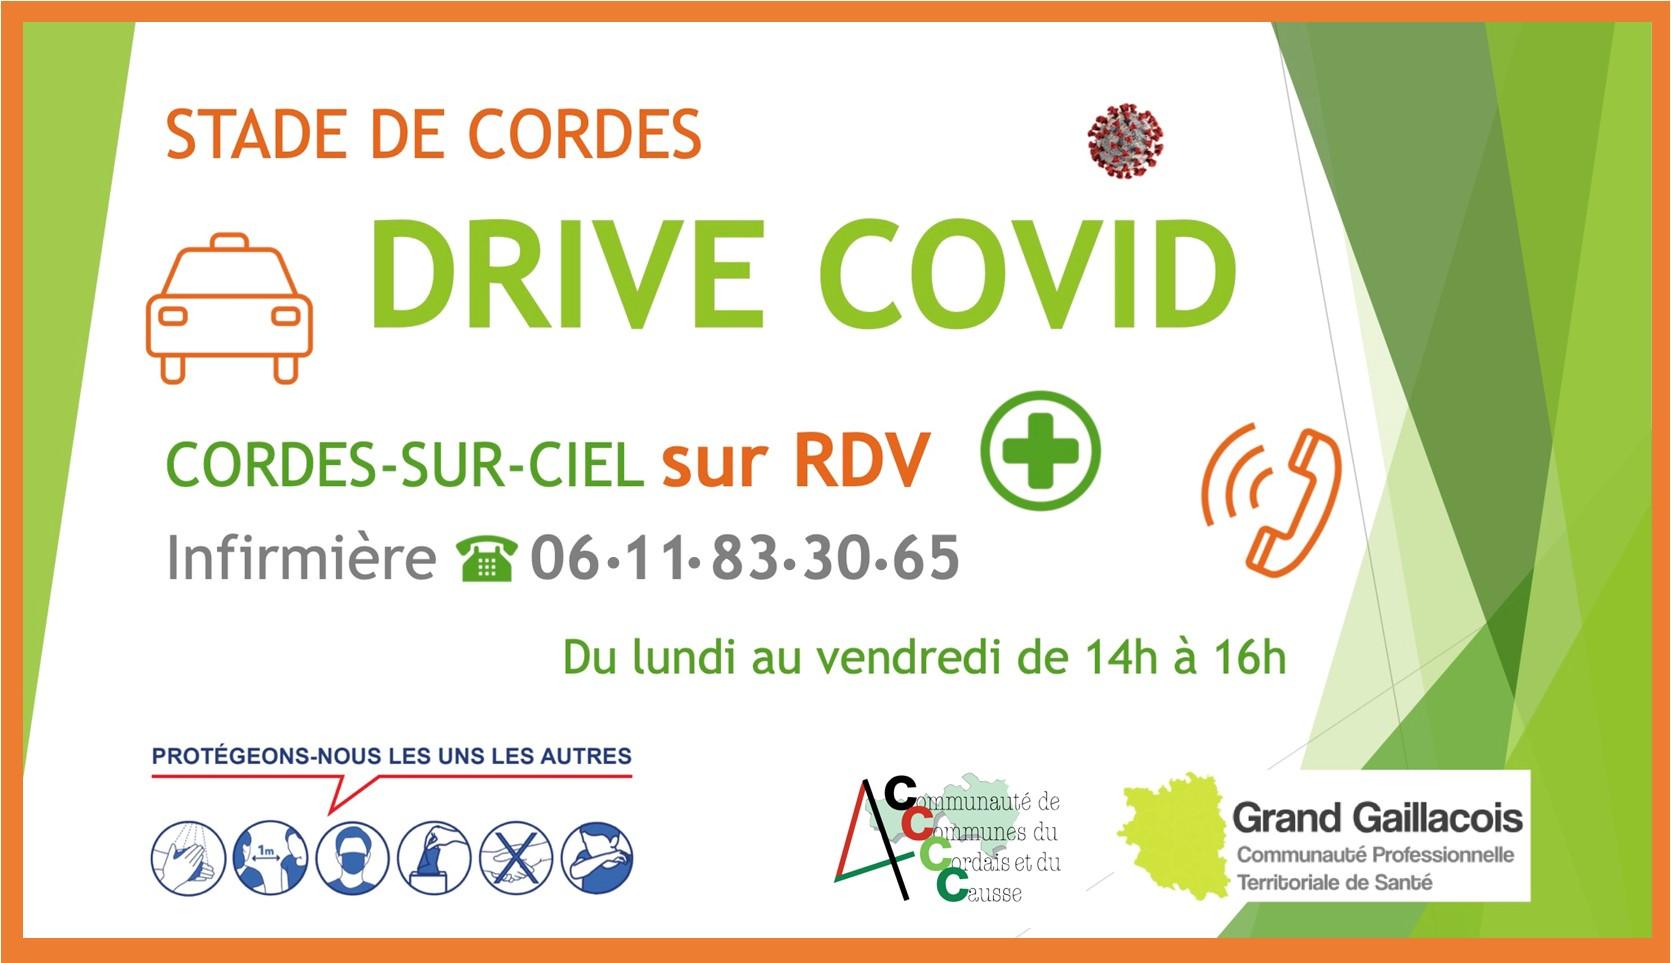 Drive covid infos rdv